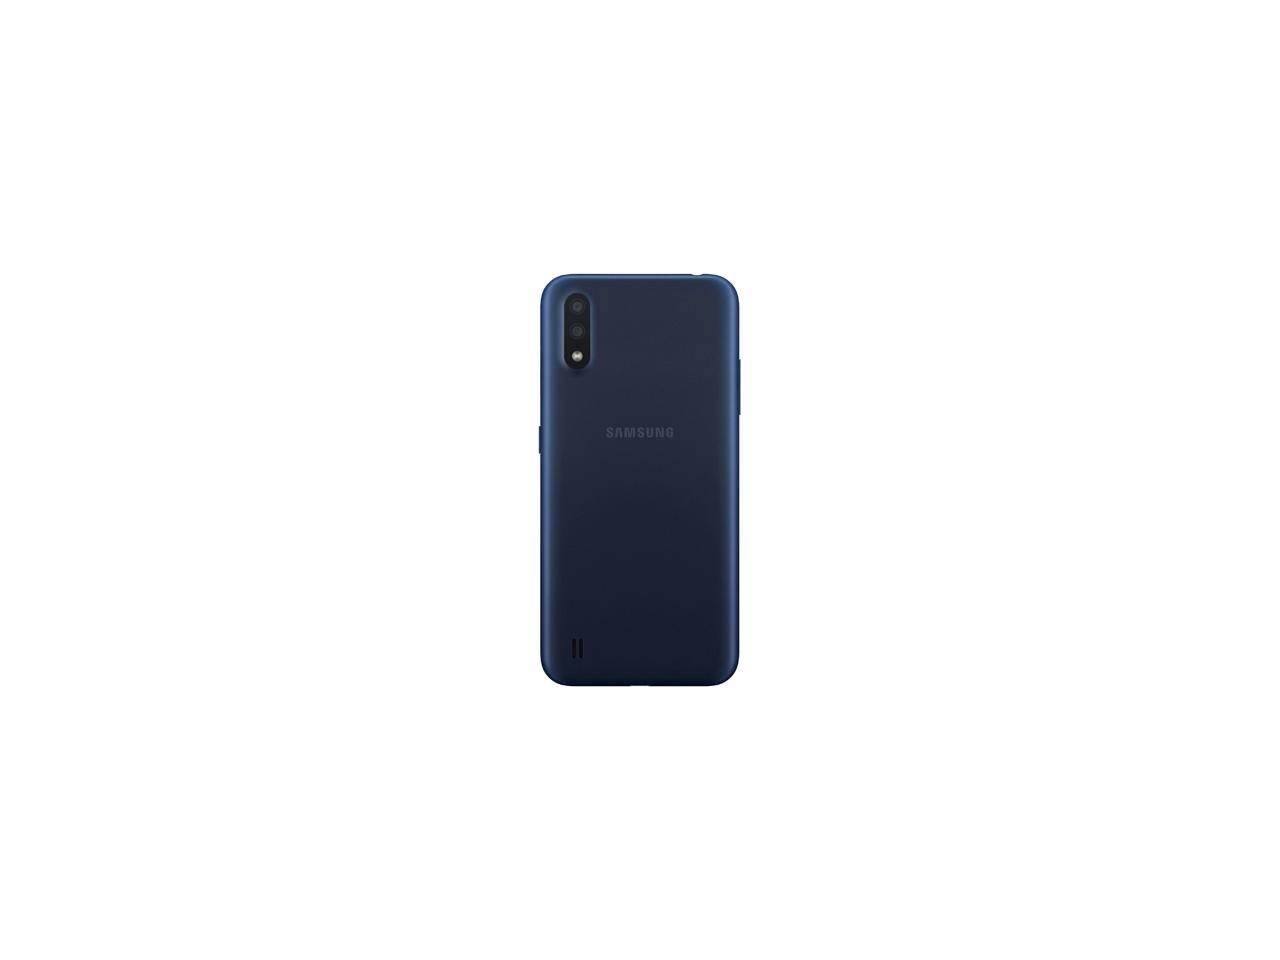 Samsung Galaxy A01 A015M 4G LTE Dual Sim GSM Unlocked Phone (International Variant/US Compatible LTE) 5.7" Blue 32GB 2GB RAM